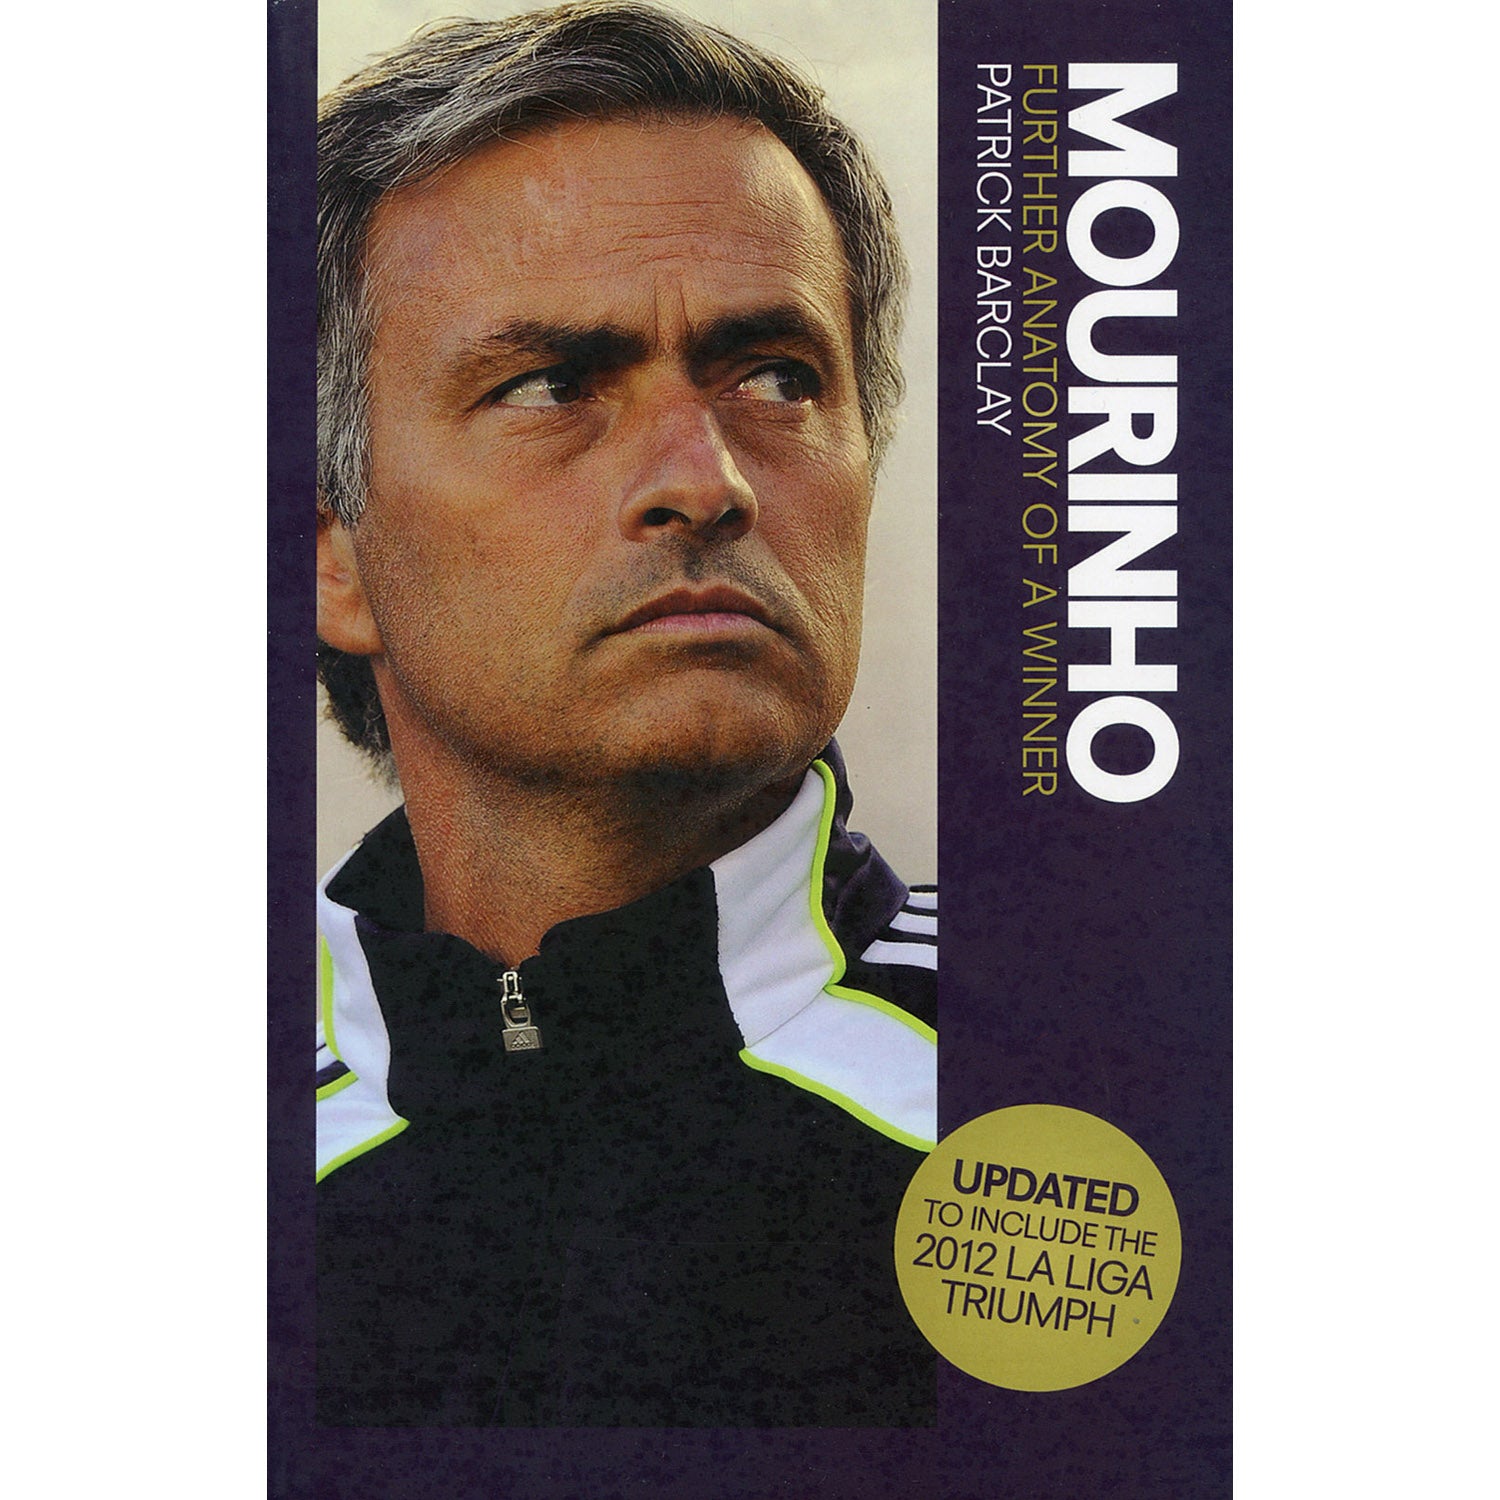 Mourinho – Further Anatomy of a Winner